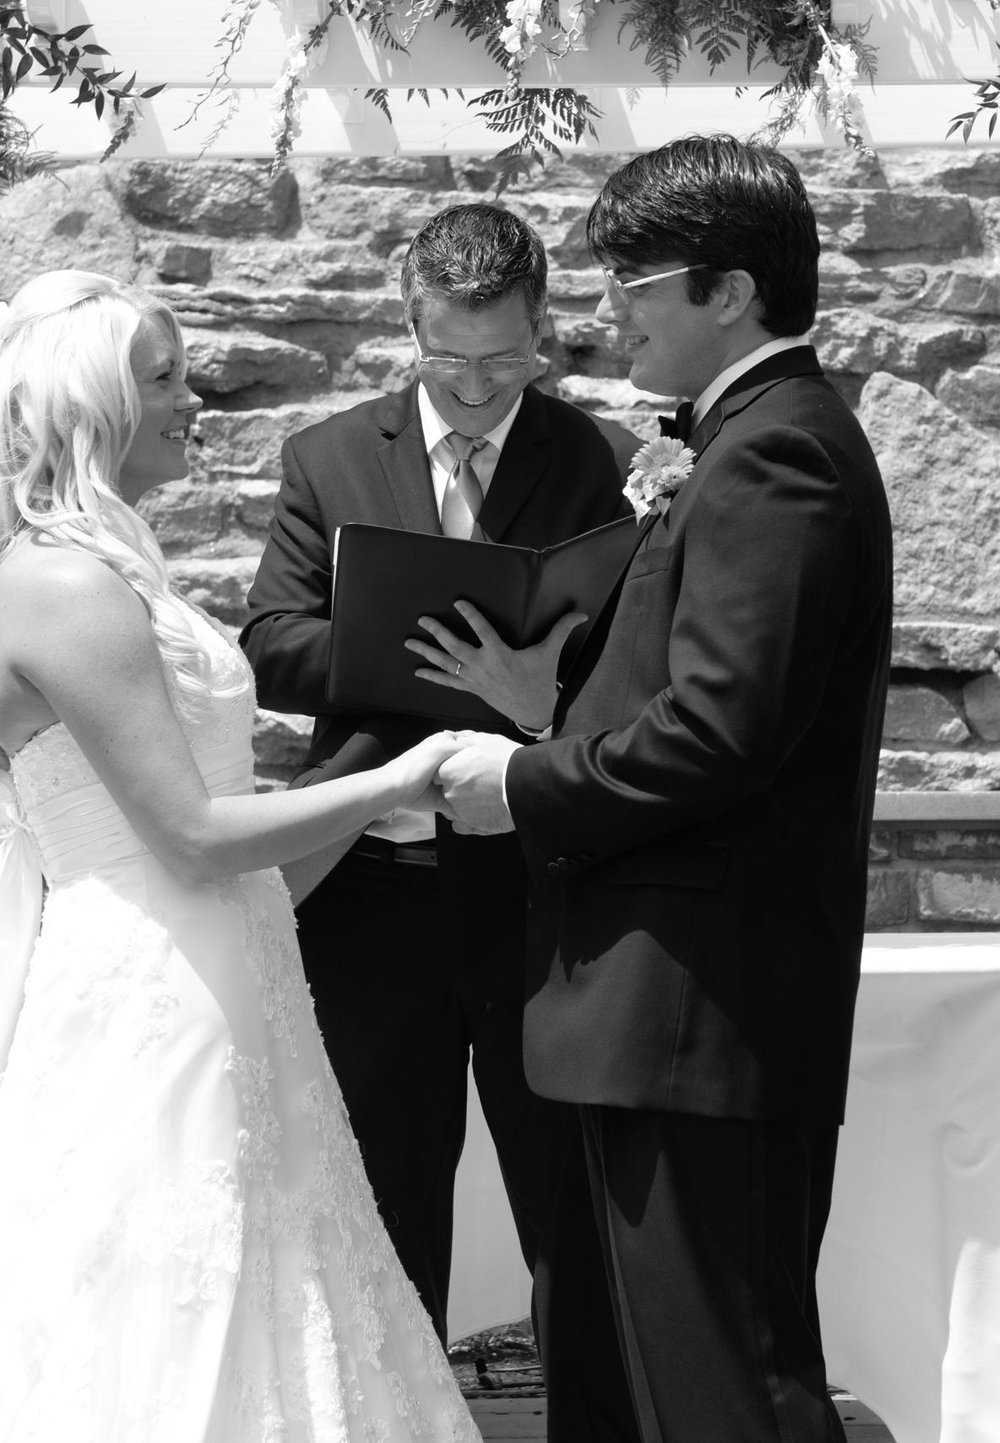 Columbus Ohio, Ben and Teresa's wedding with Damian King officiant